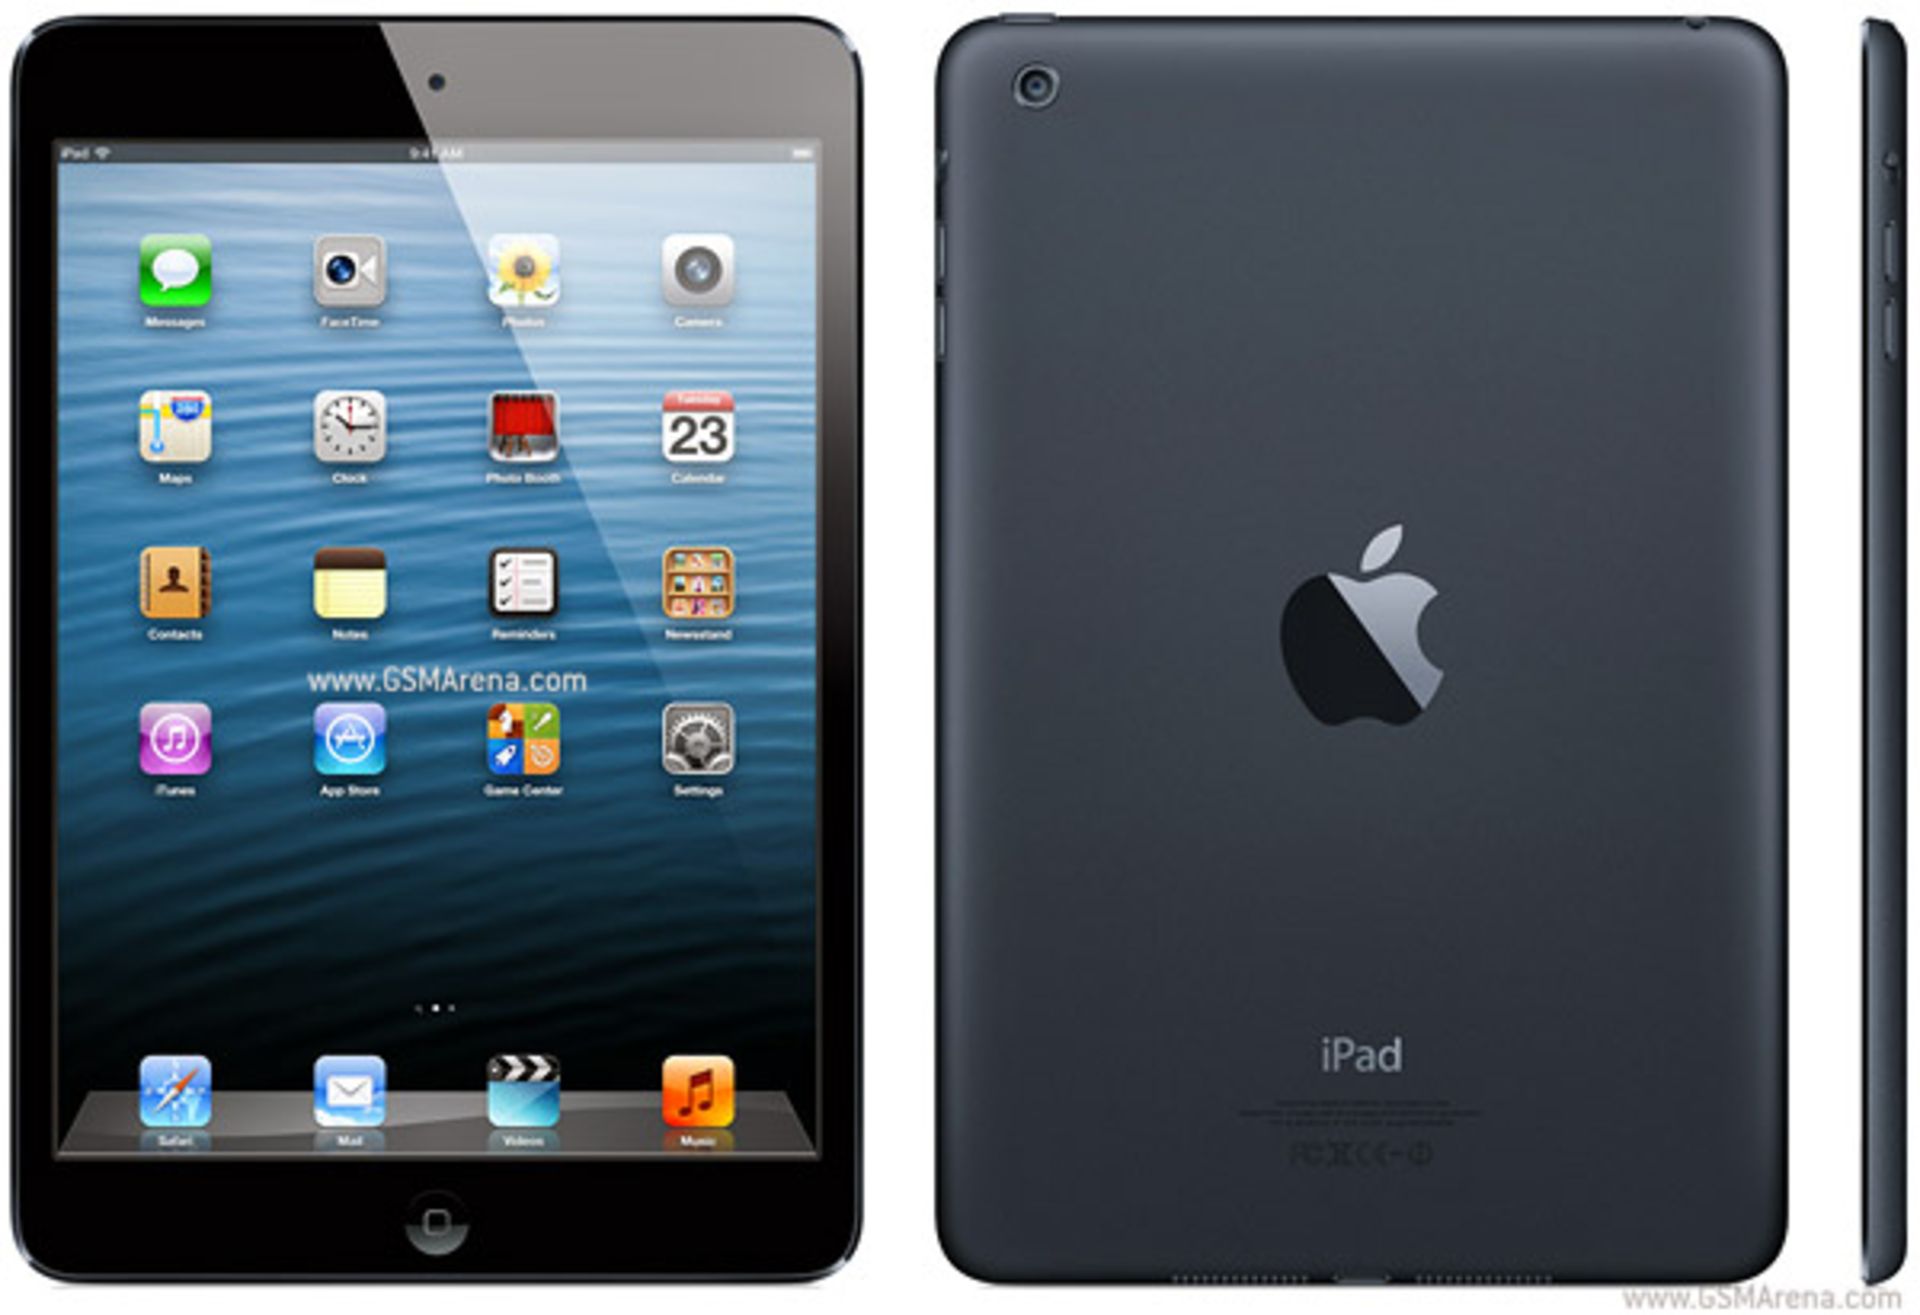 V Grade A Apple iPad Mini 16GB Black (With Matt Black Back) Front And Rear Facing Cameras And